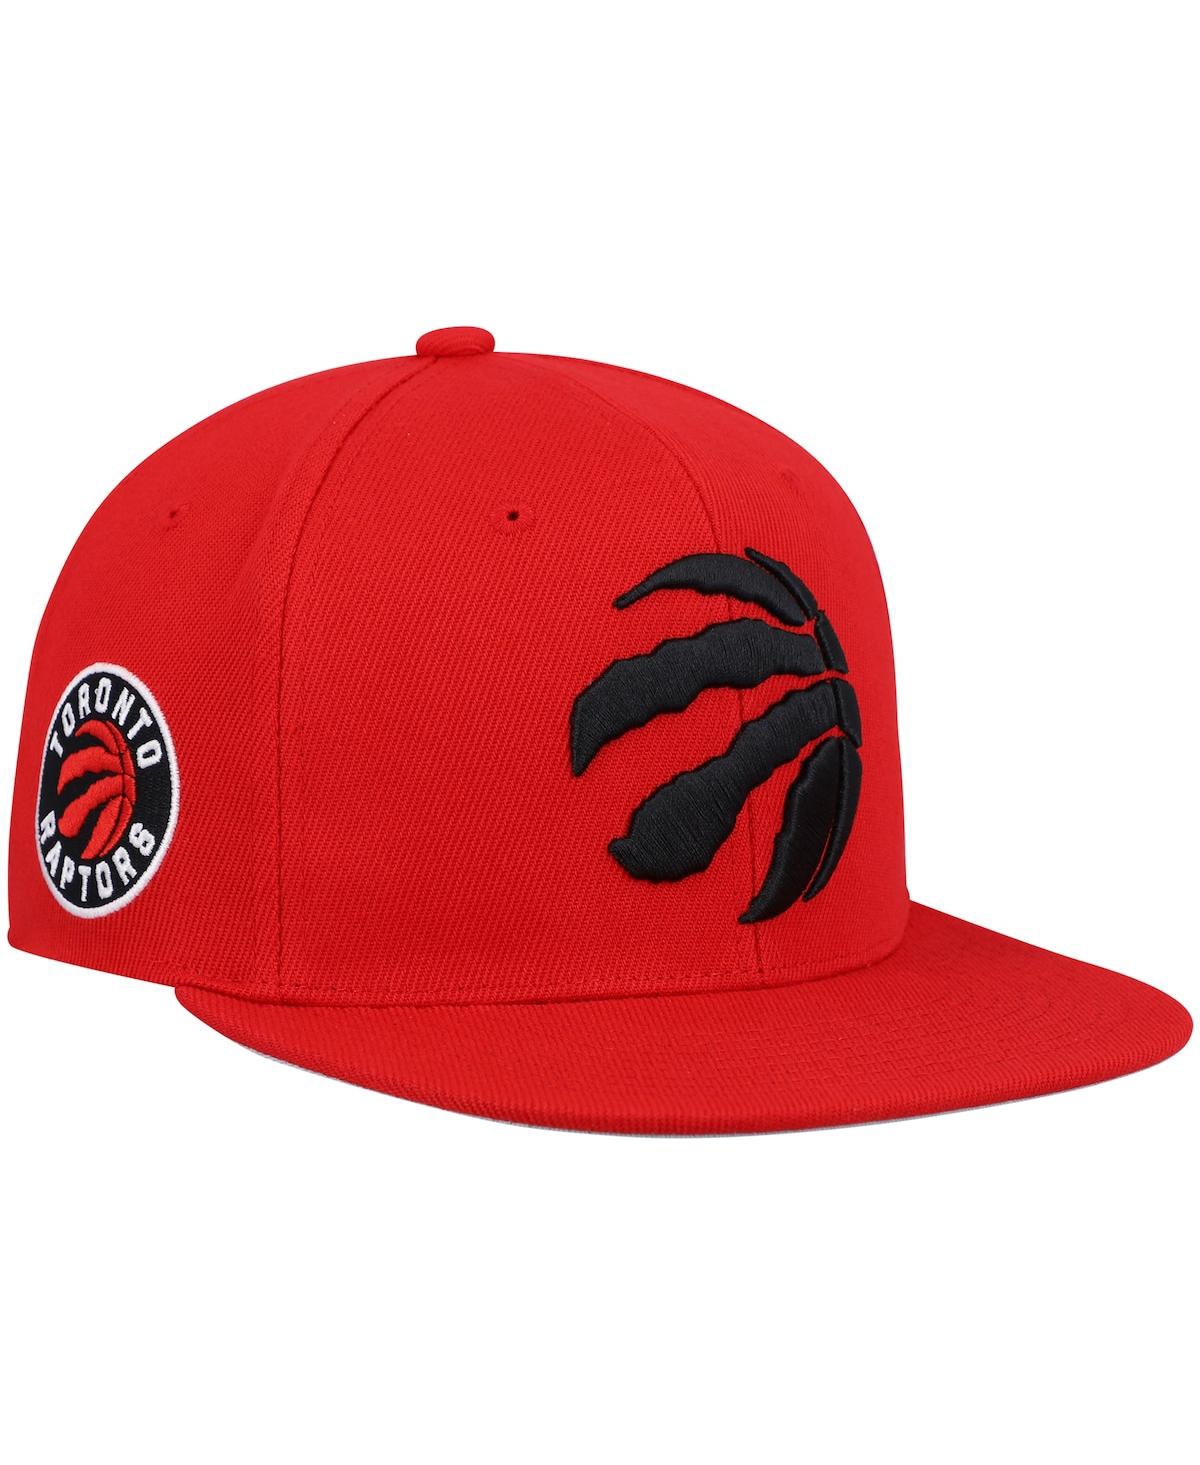 Shop Mitchell & Ness Men's  Red Toronto Raptors Core Side Snapback Hat